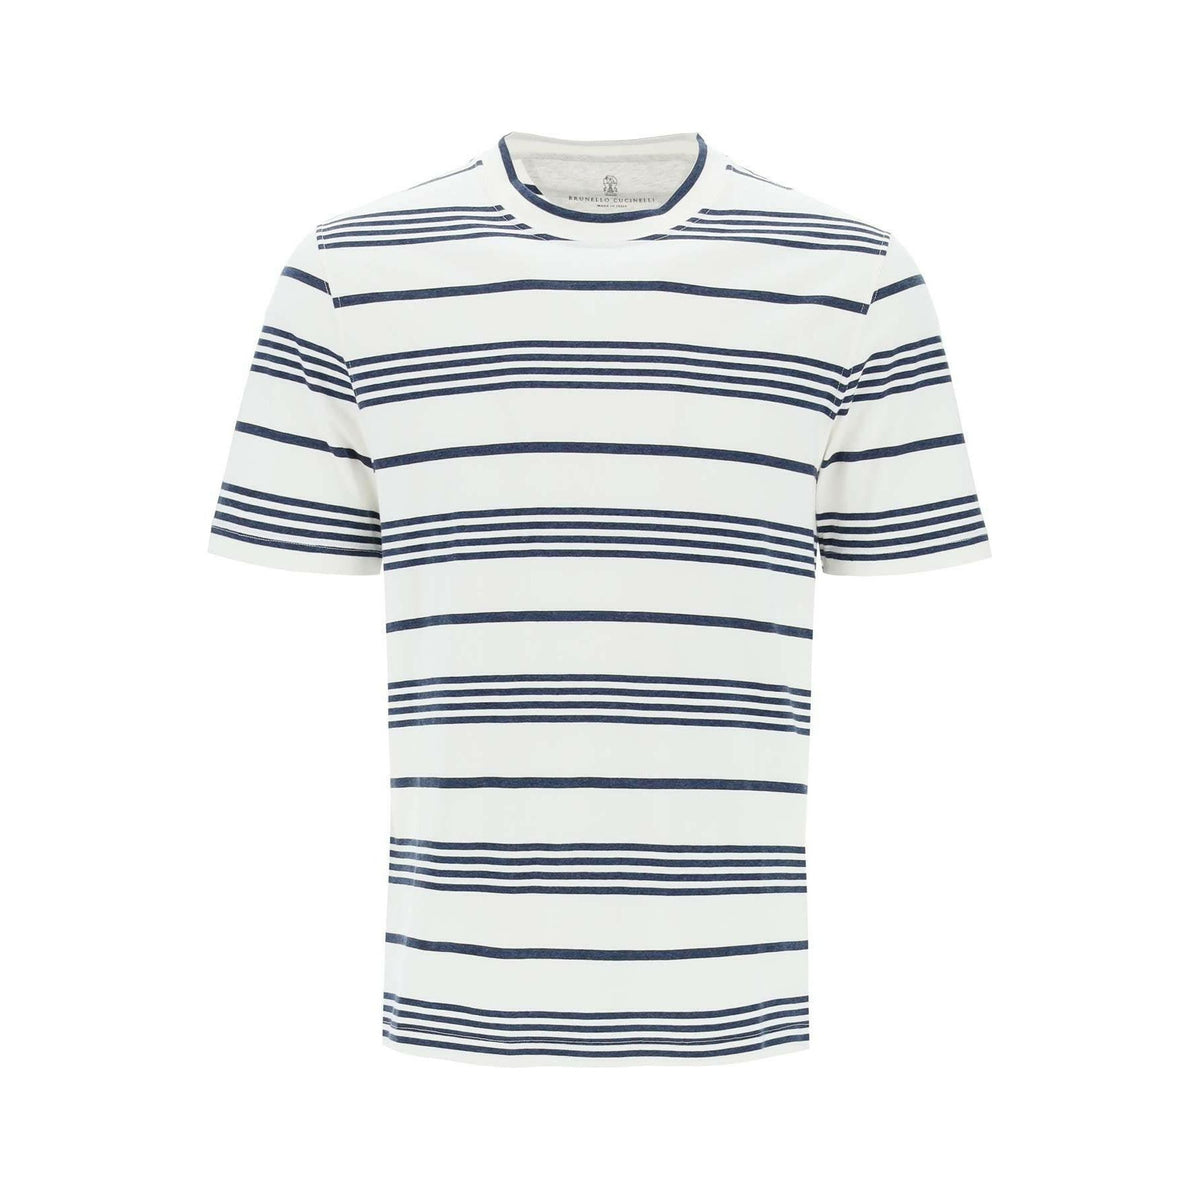 BRUNELLO CUCINELLI - Off-White and Navy Striped Cotton Jersey T-Shirt - JOHN JULIA